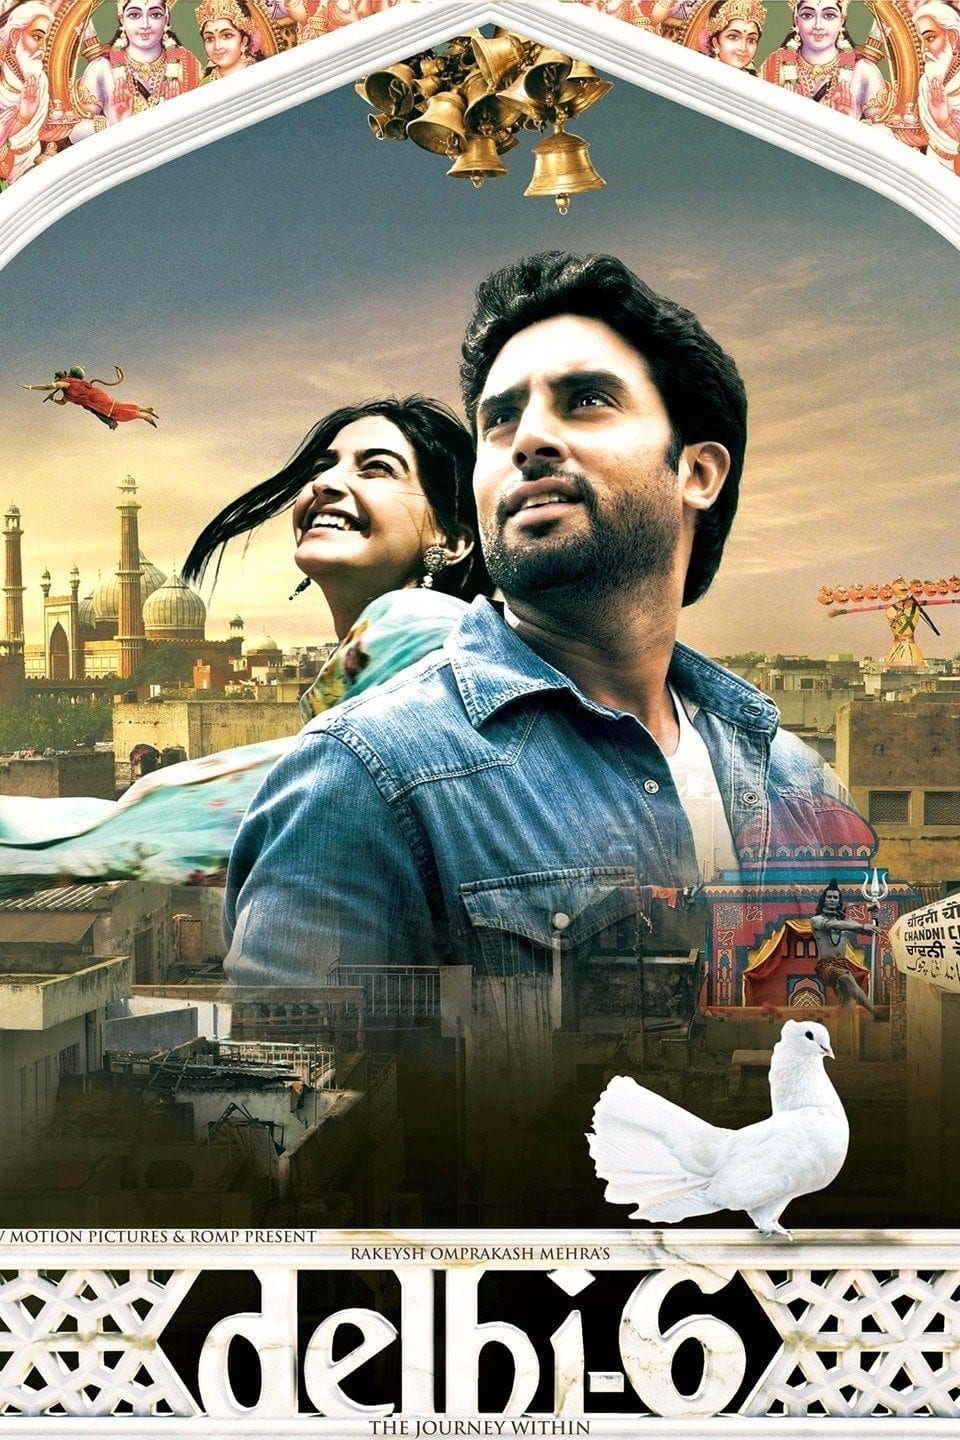 Poster for the movie "Delhi-6"